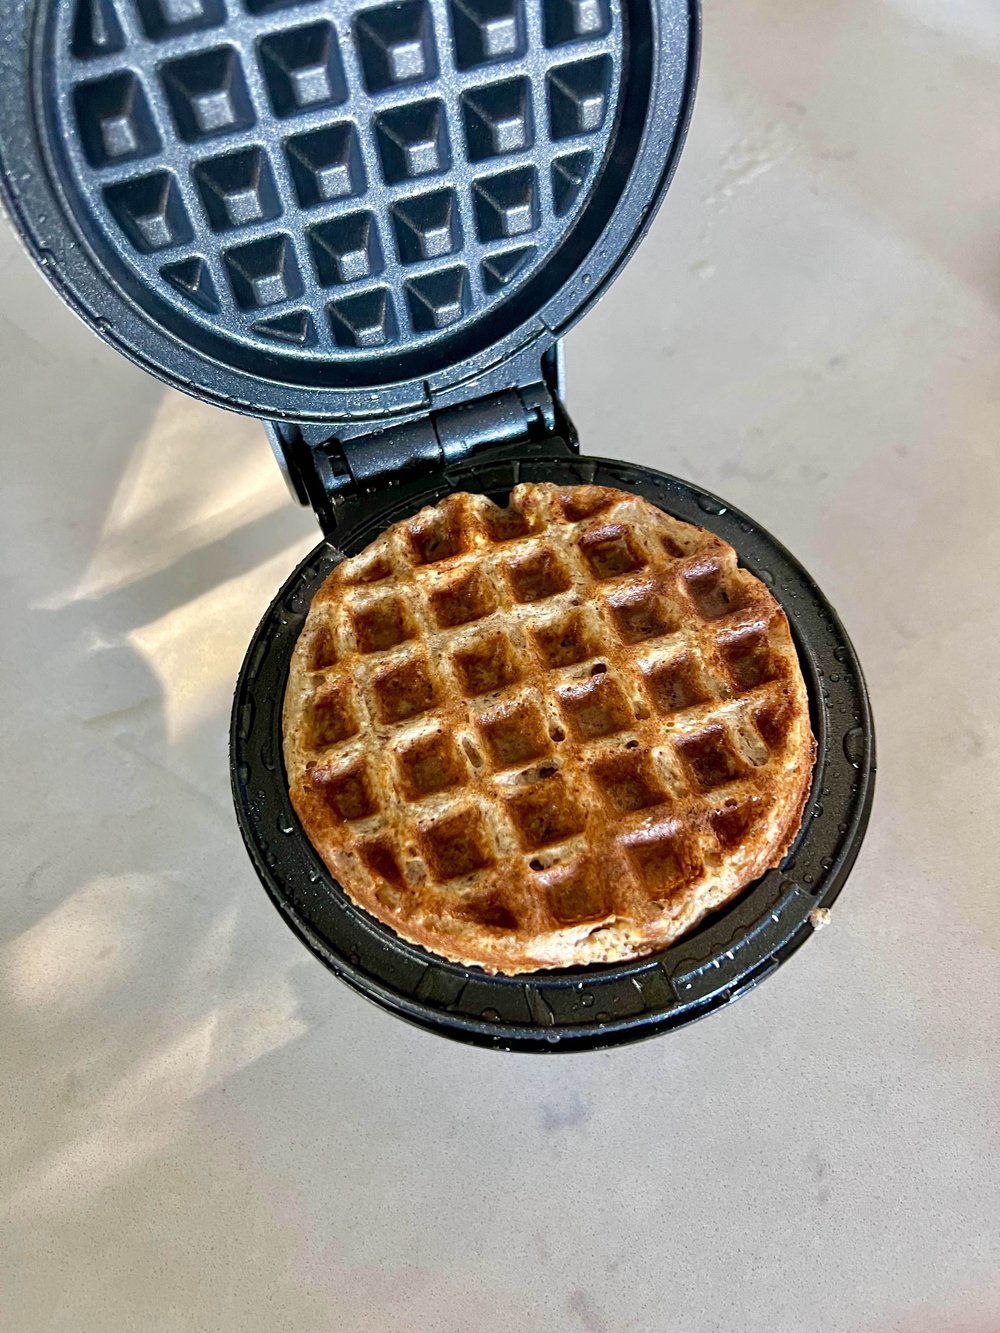 mini waffle maker